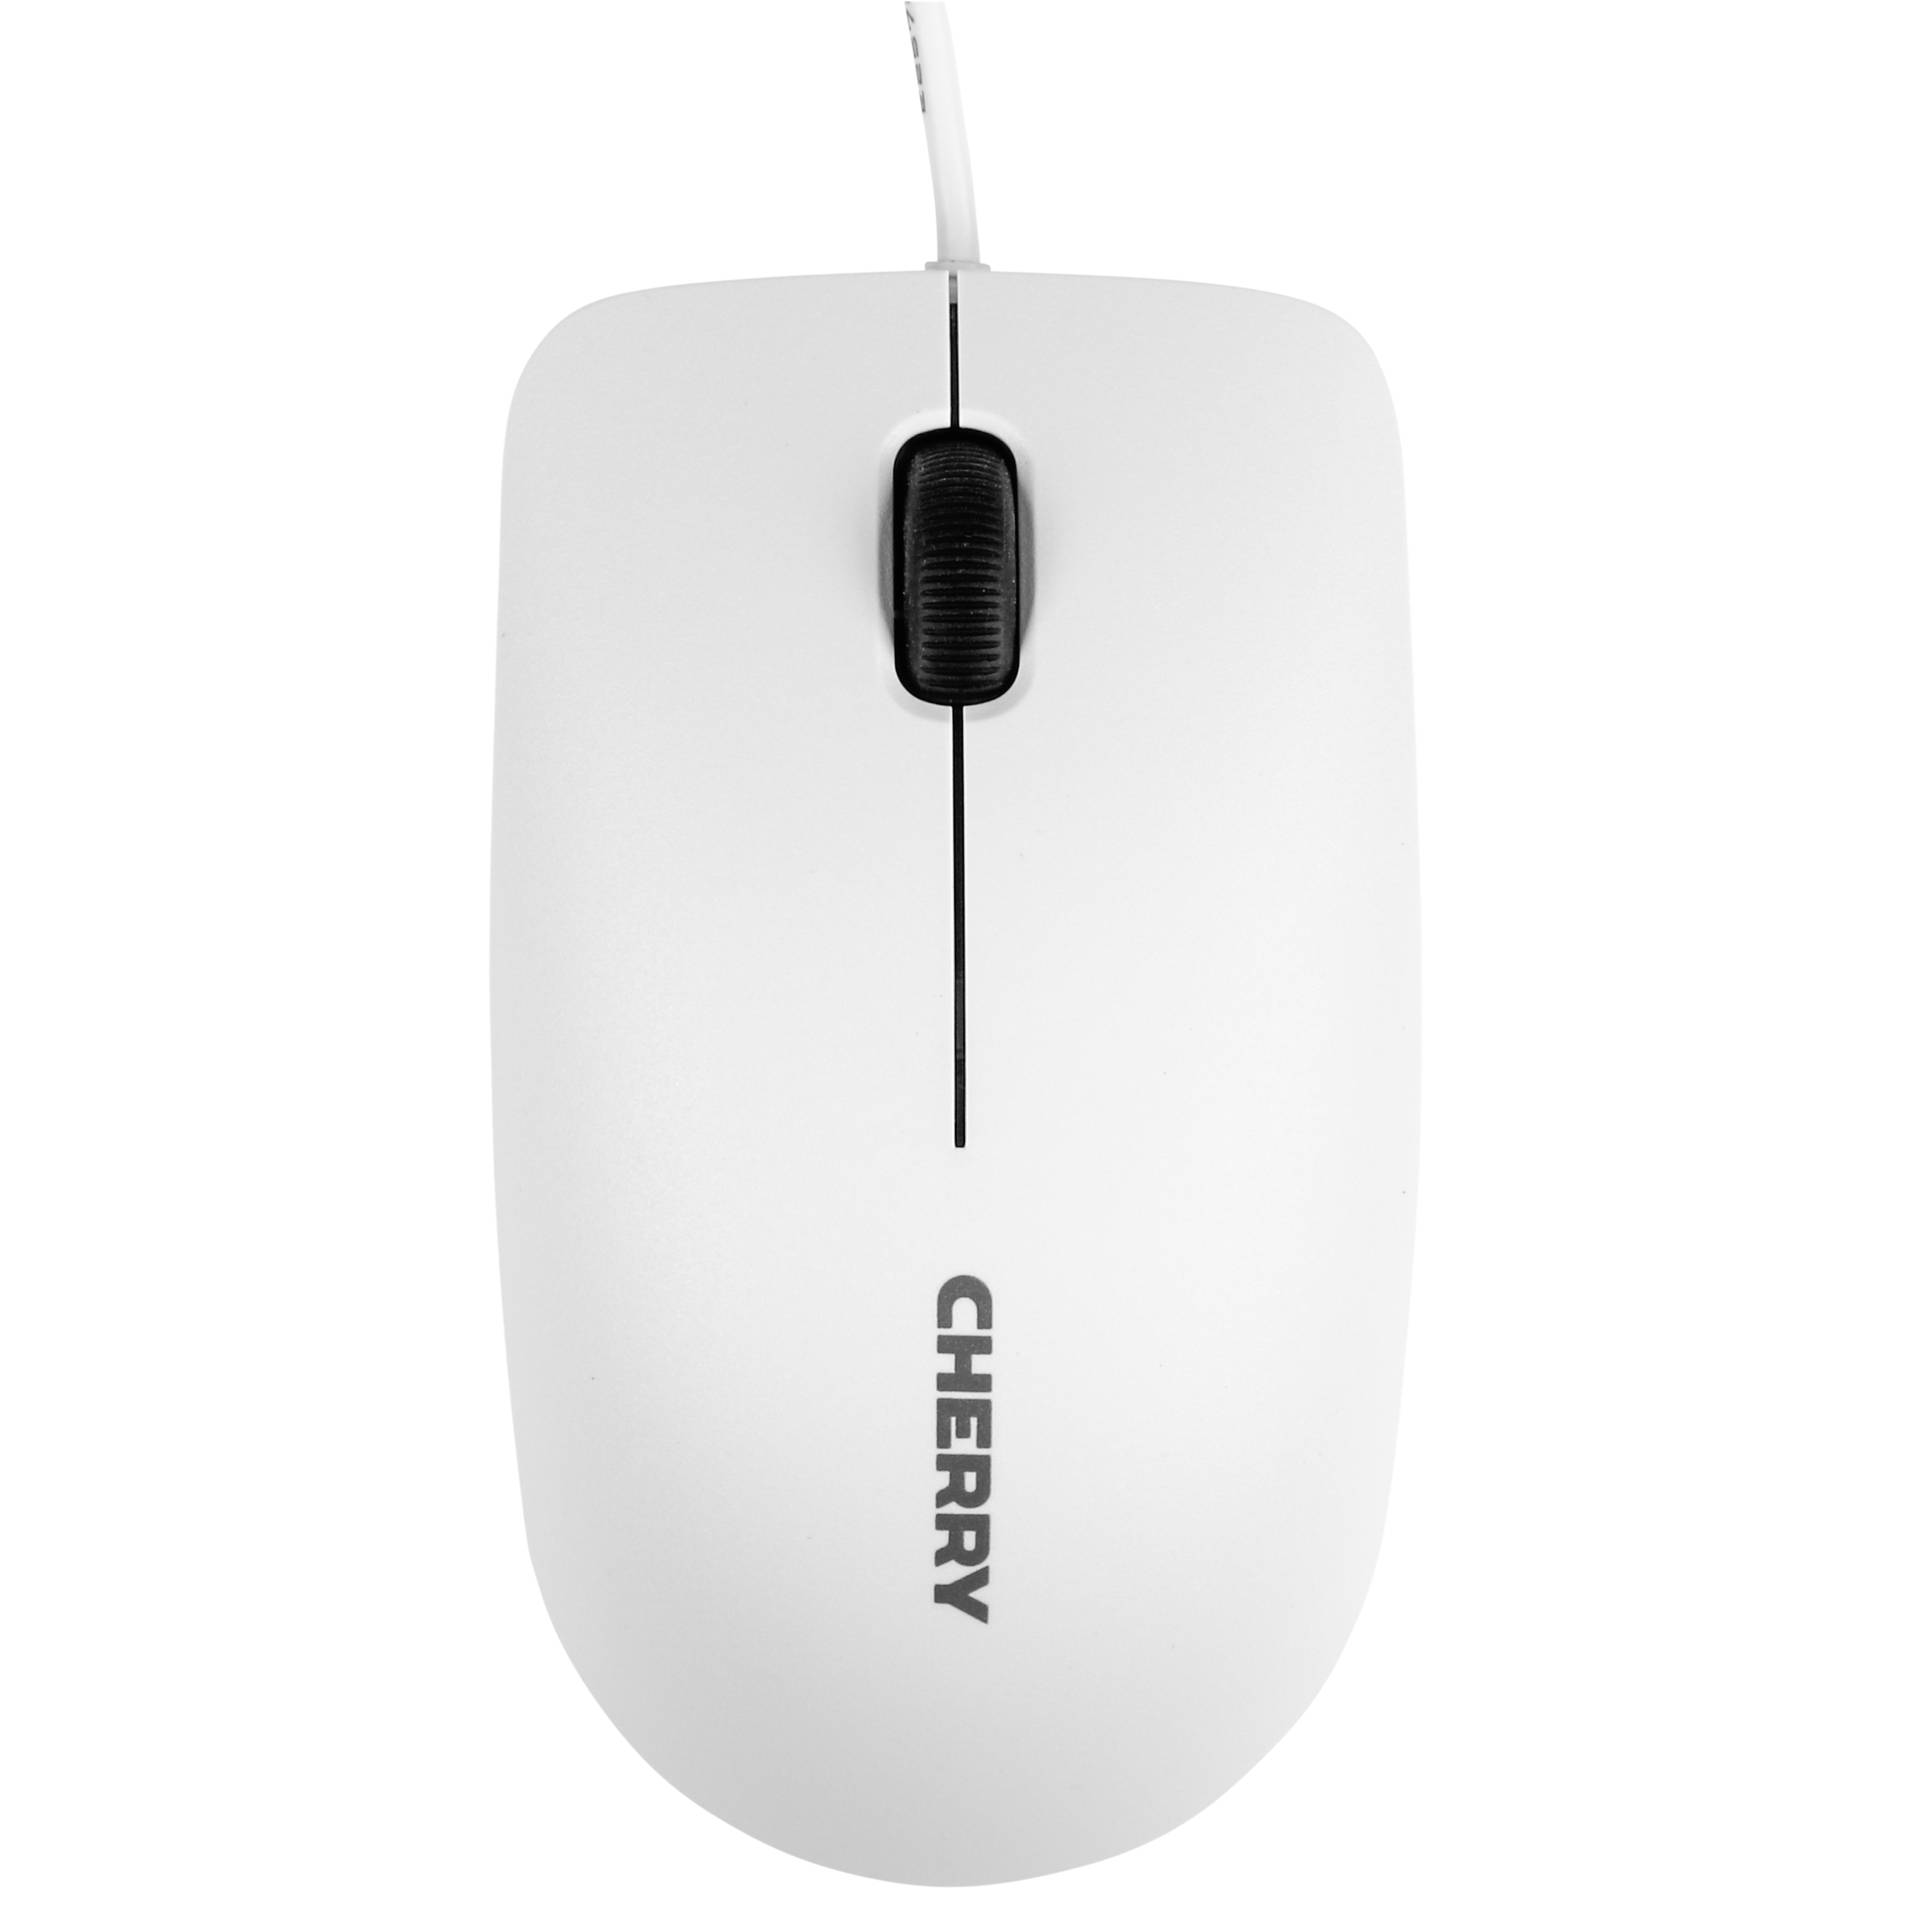 CHERRY MC 1000 Kabelgebundene Maus, Weiß Grau, USB